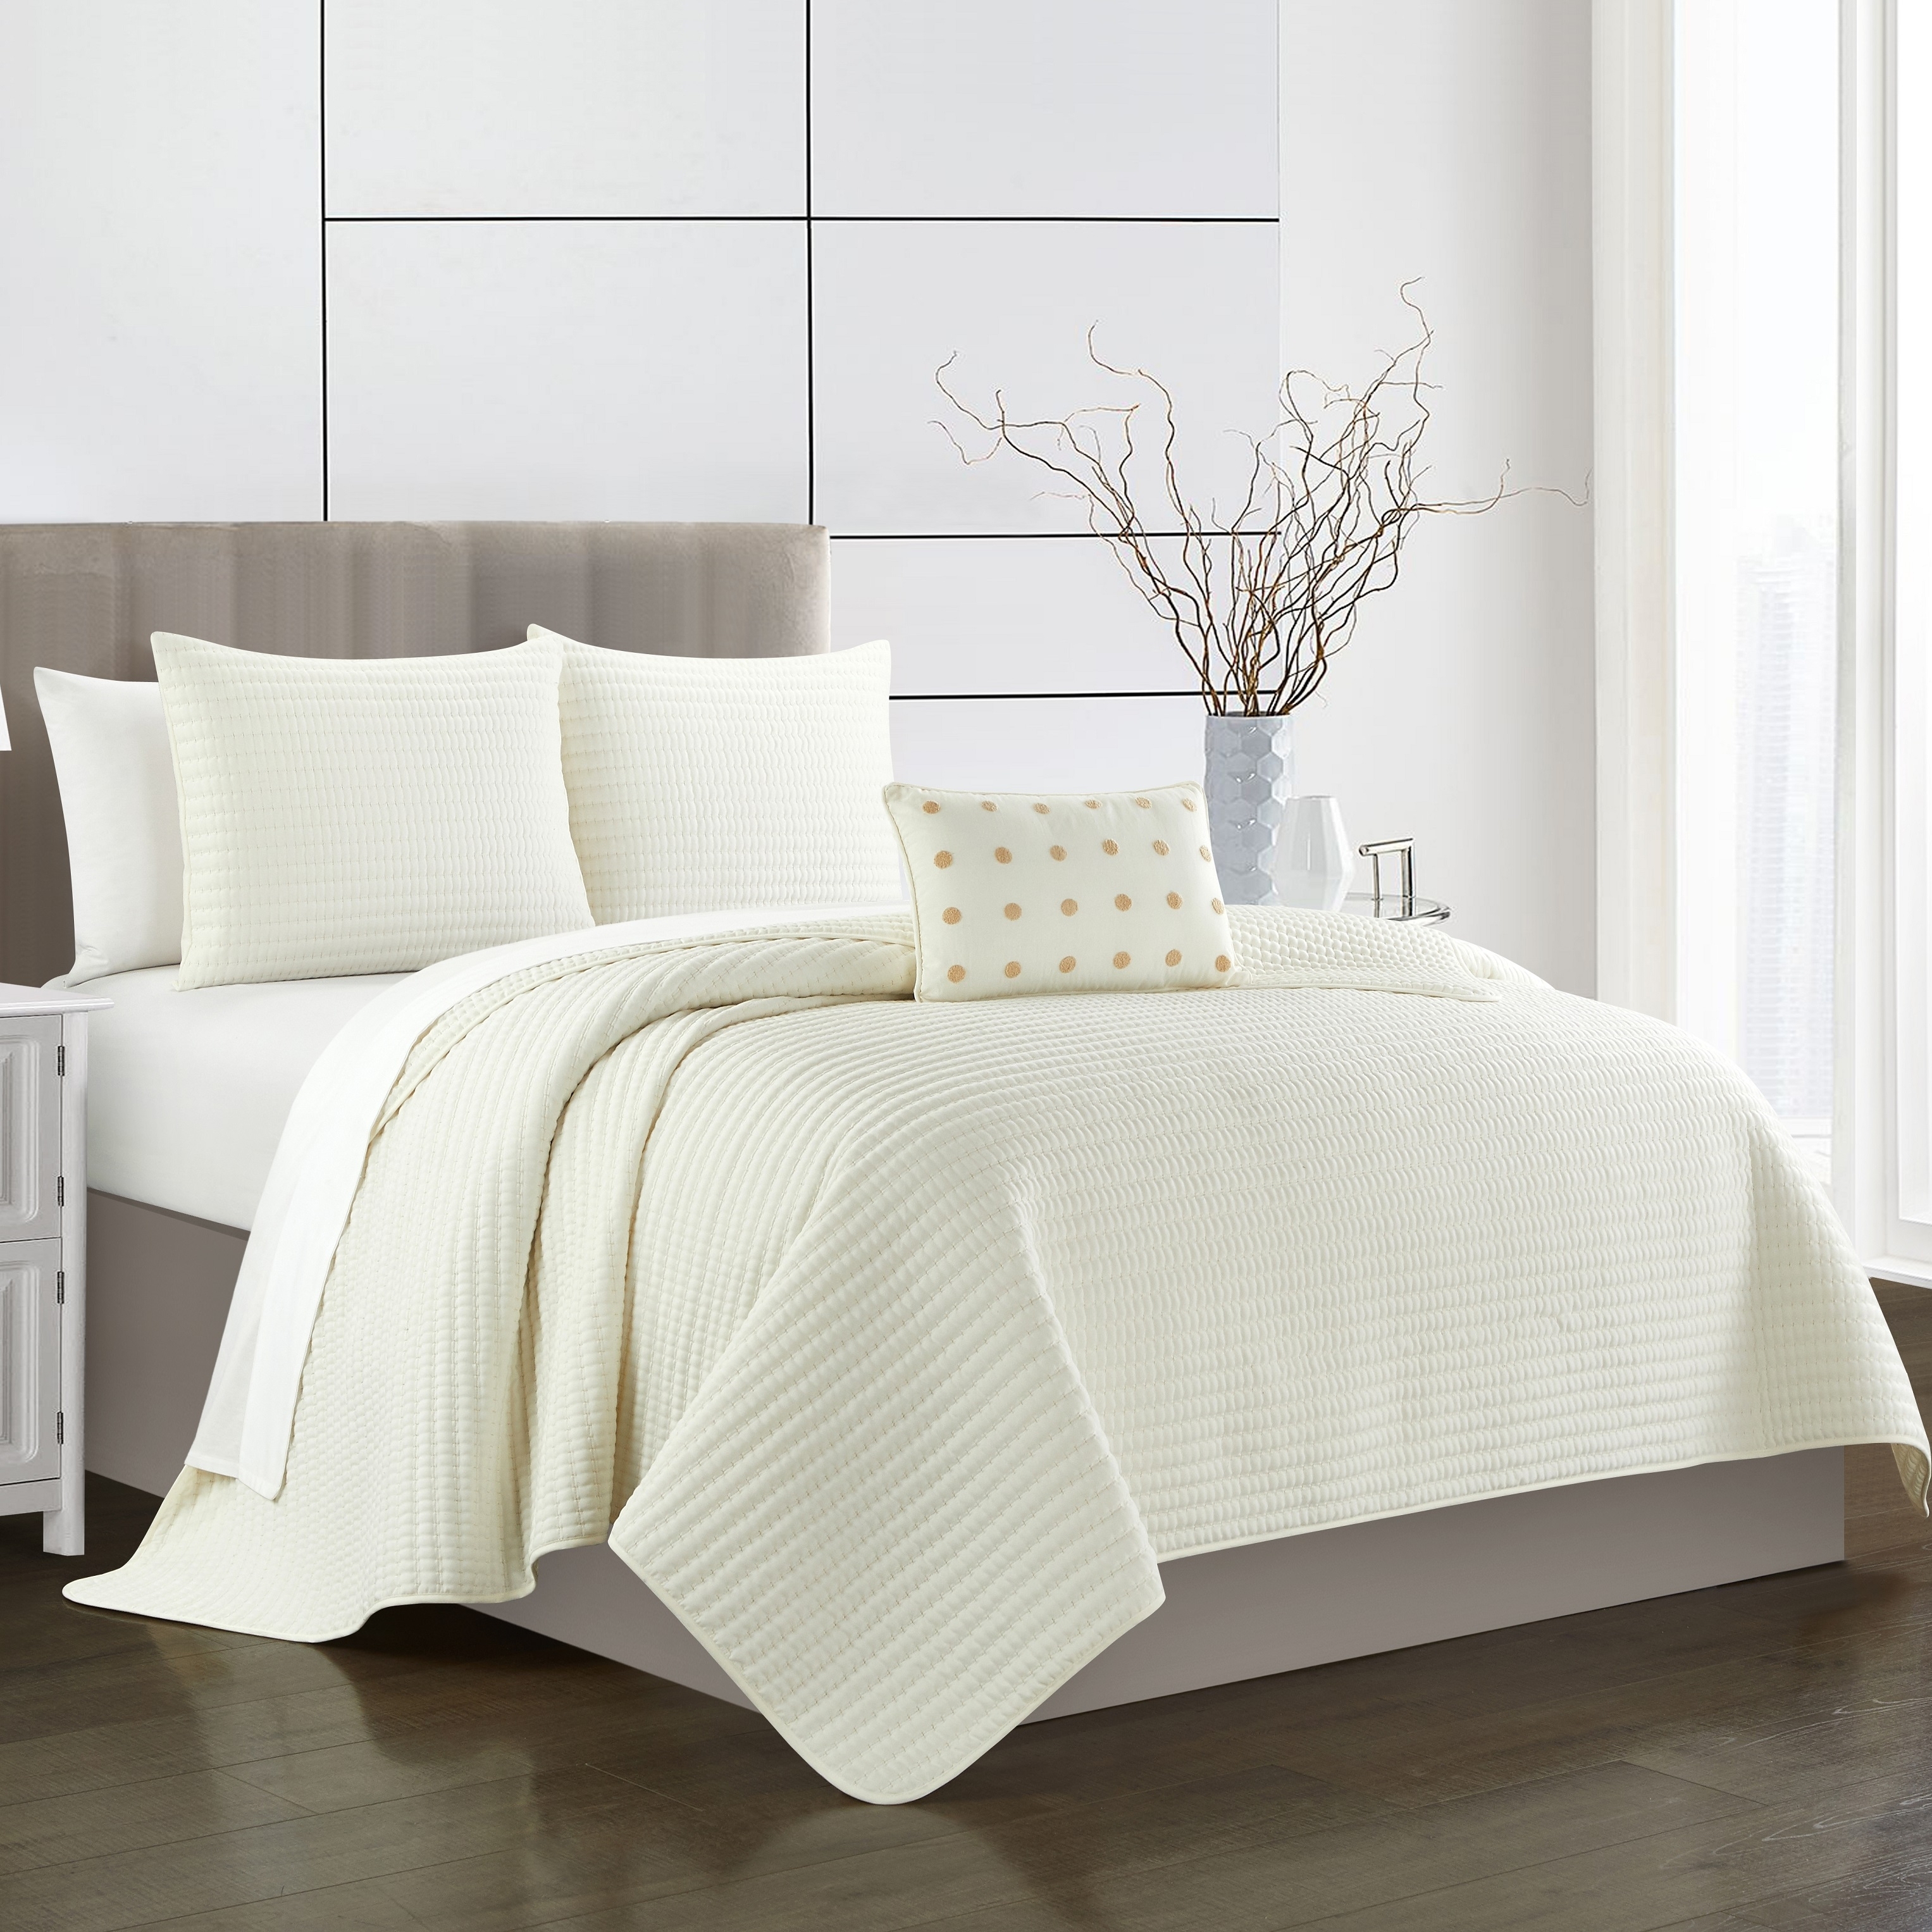 Hayden 4 Piece Quilt Set Striped Box Stitched Design Bedding - Decorative Pillow Shams Included - Sand, Queen